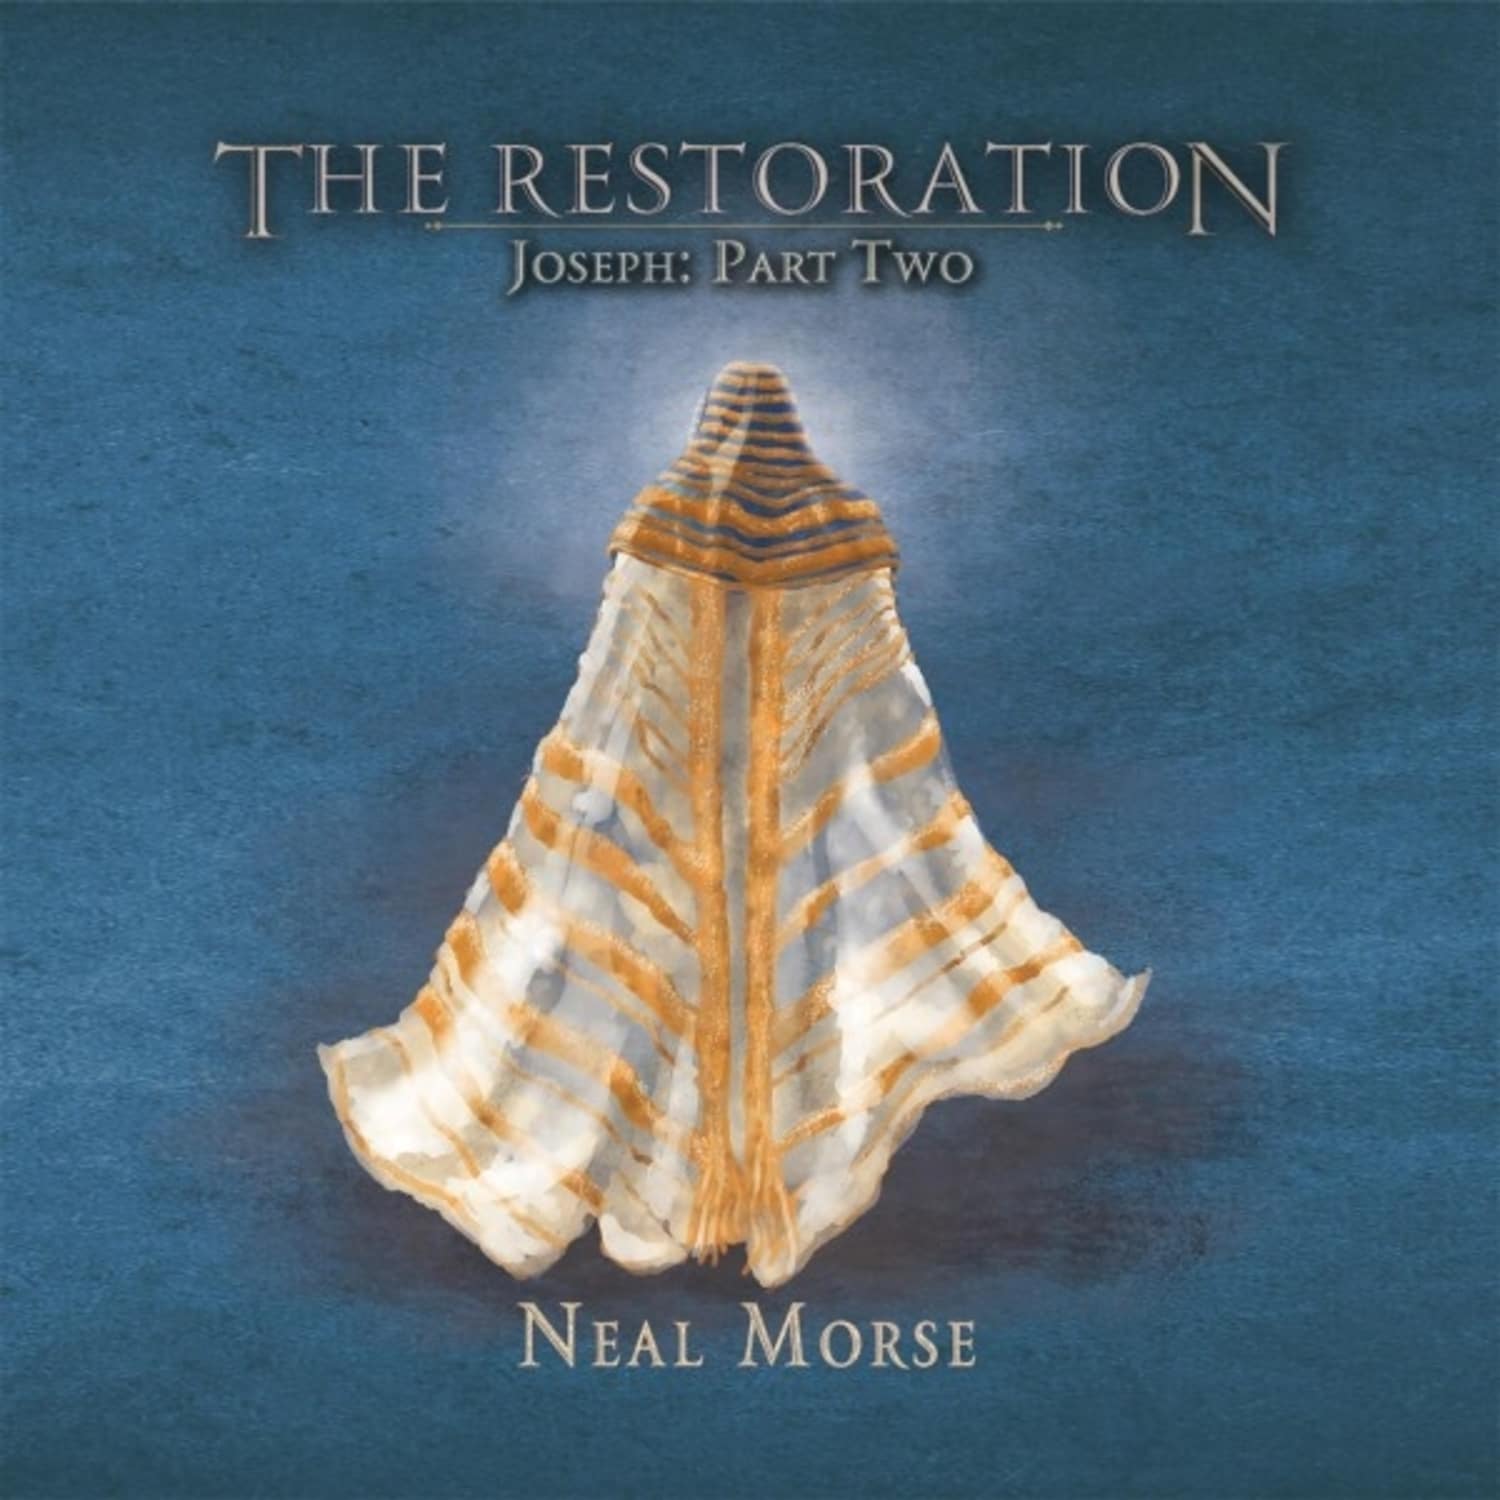 Neal Morse - THE RESTORATION - JOSEPH PART II 